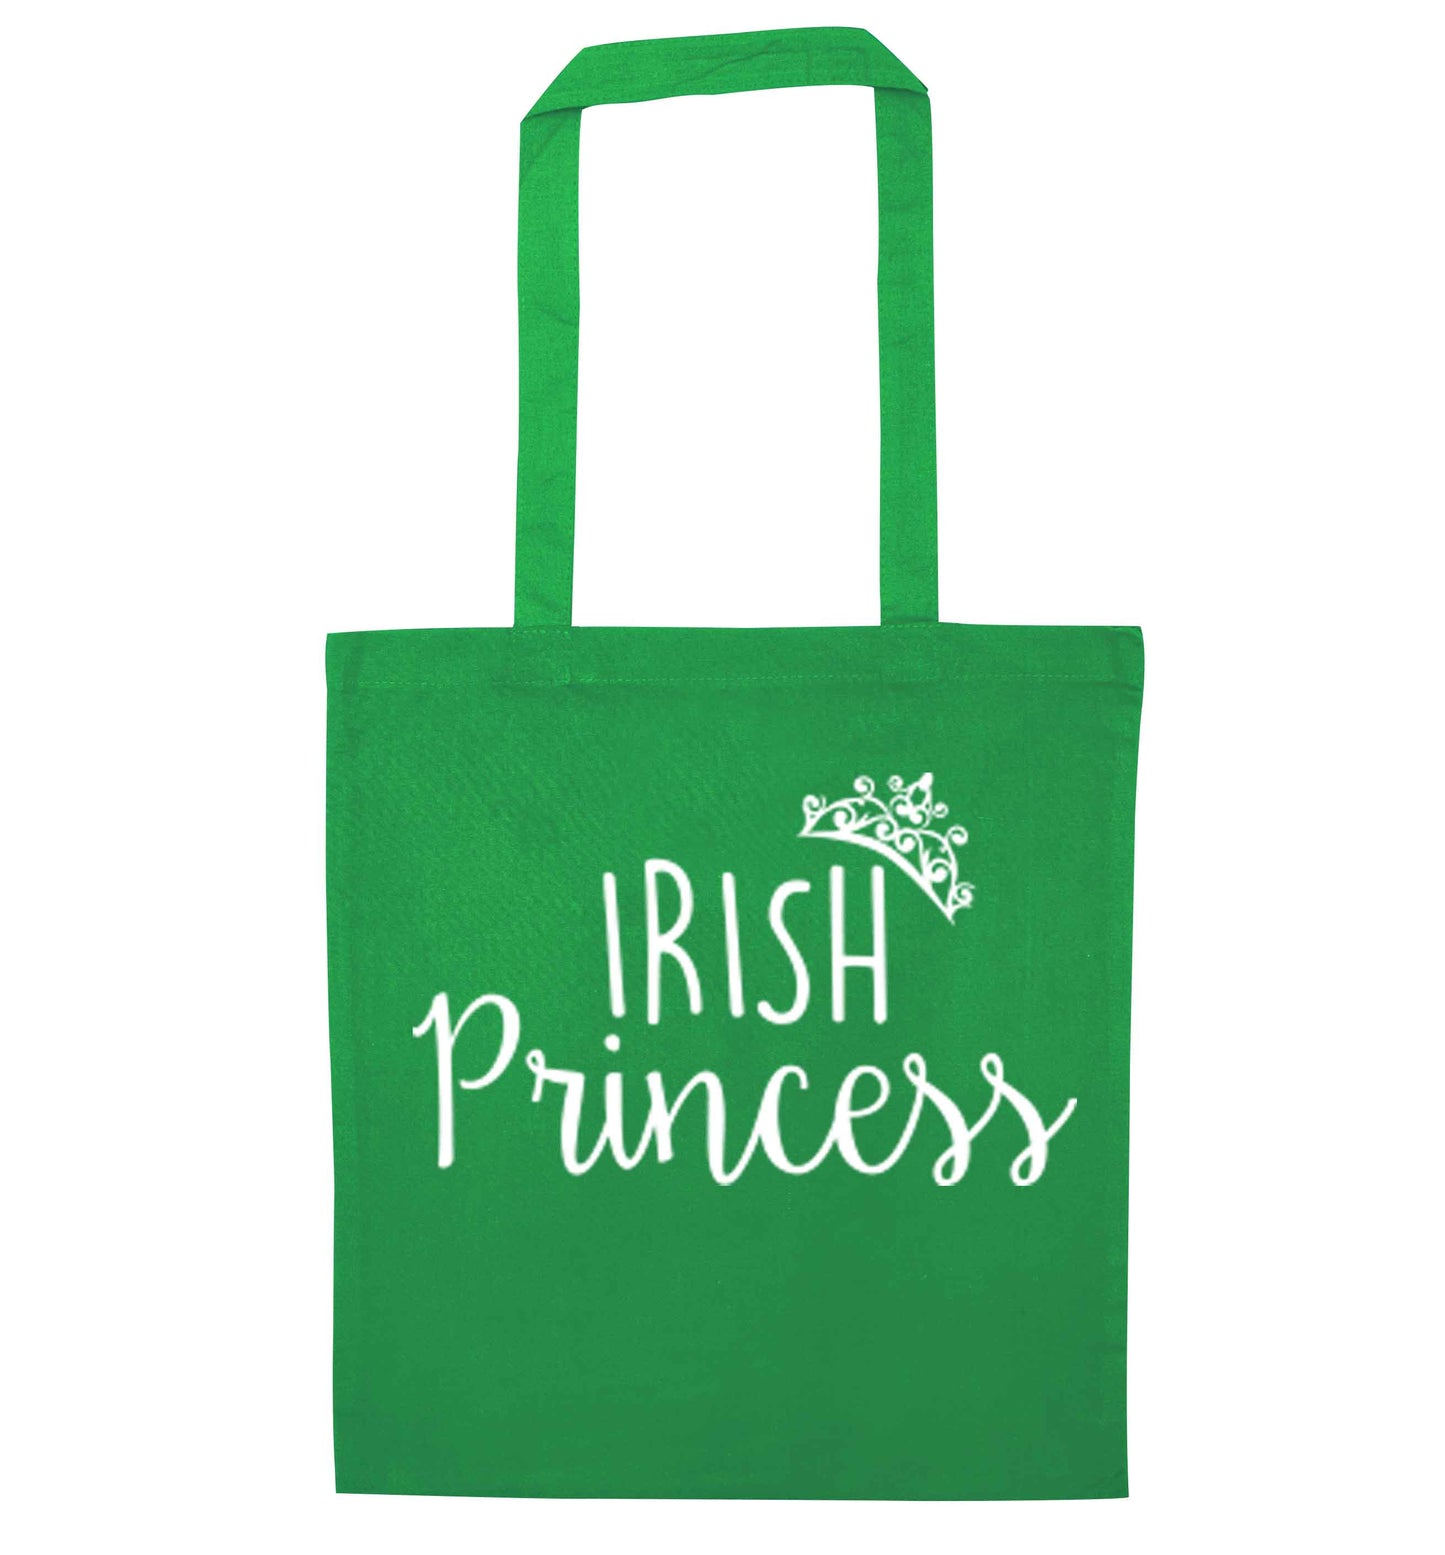 Irish princess green tote bag